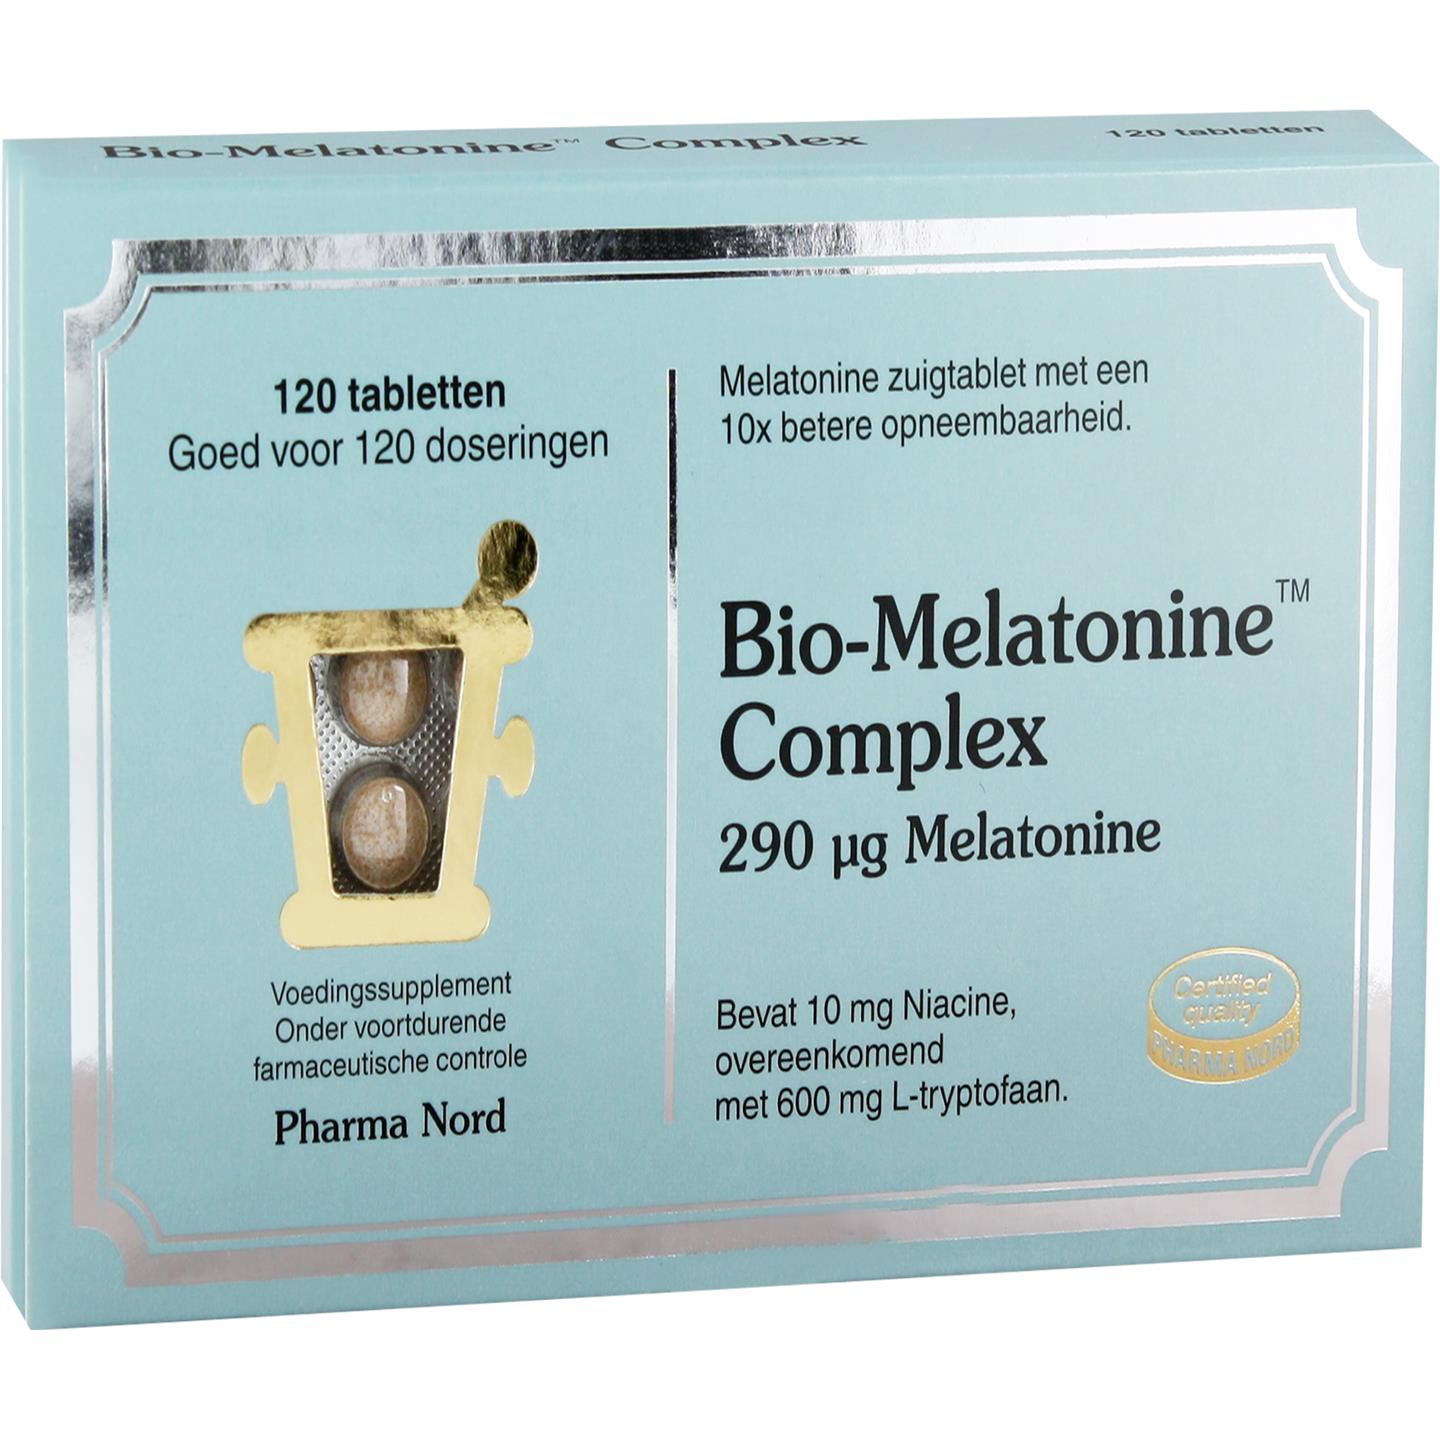 Bio-Melatonine complex